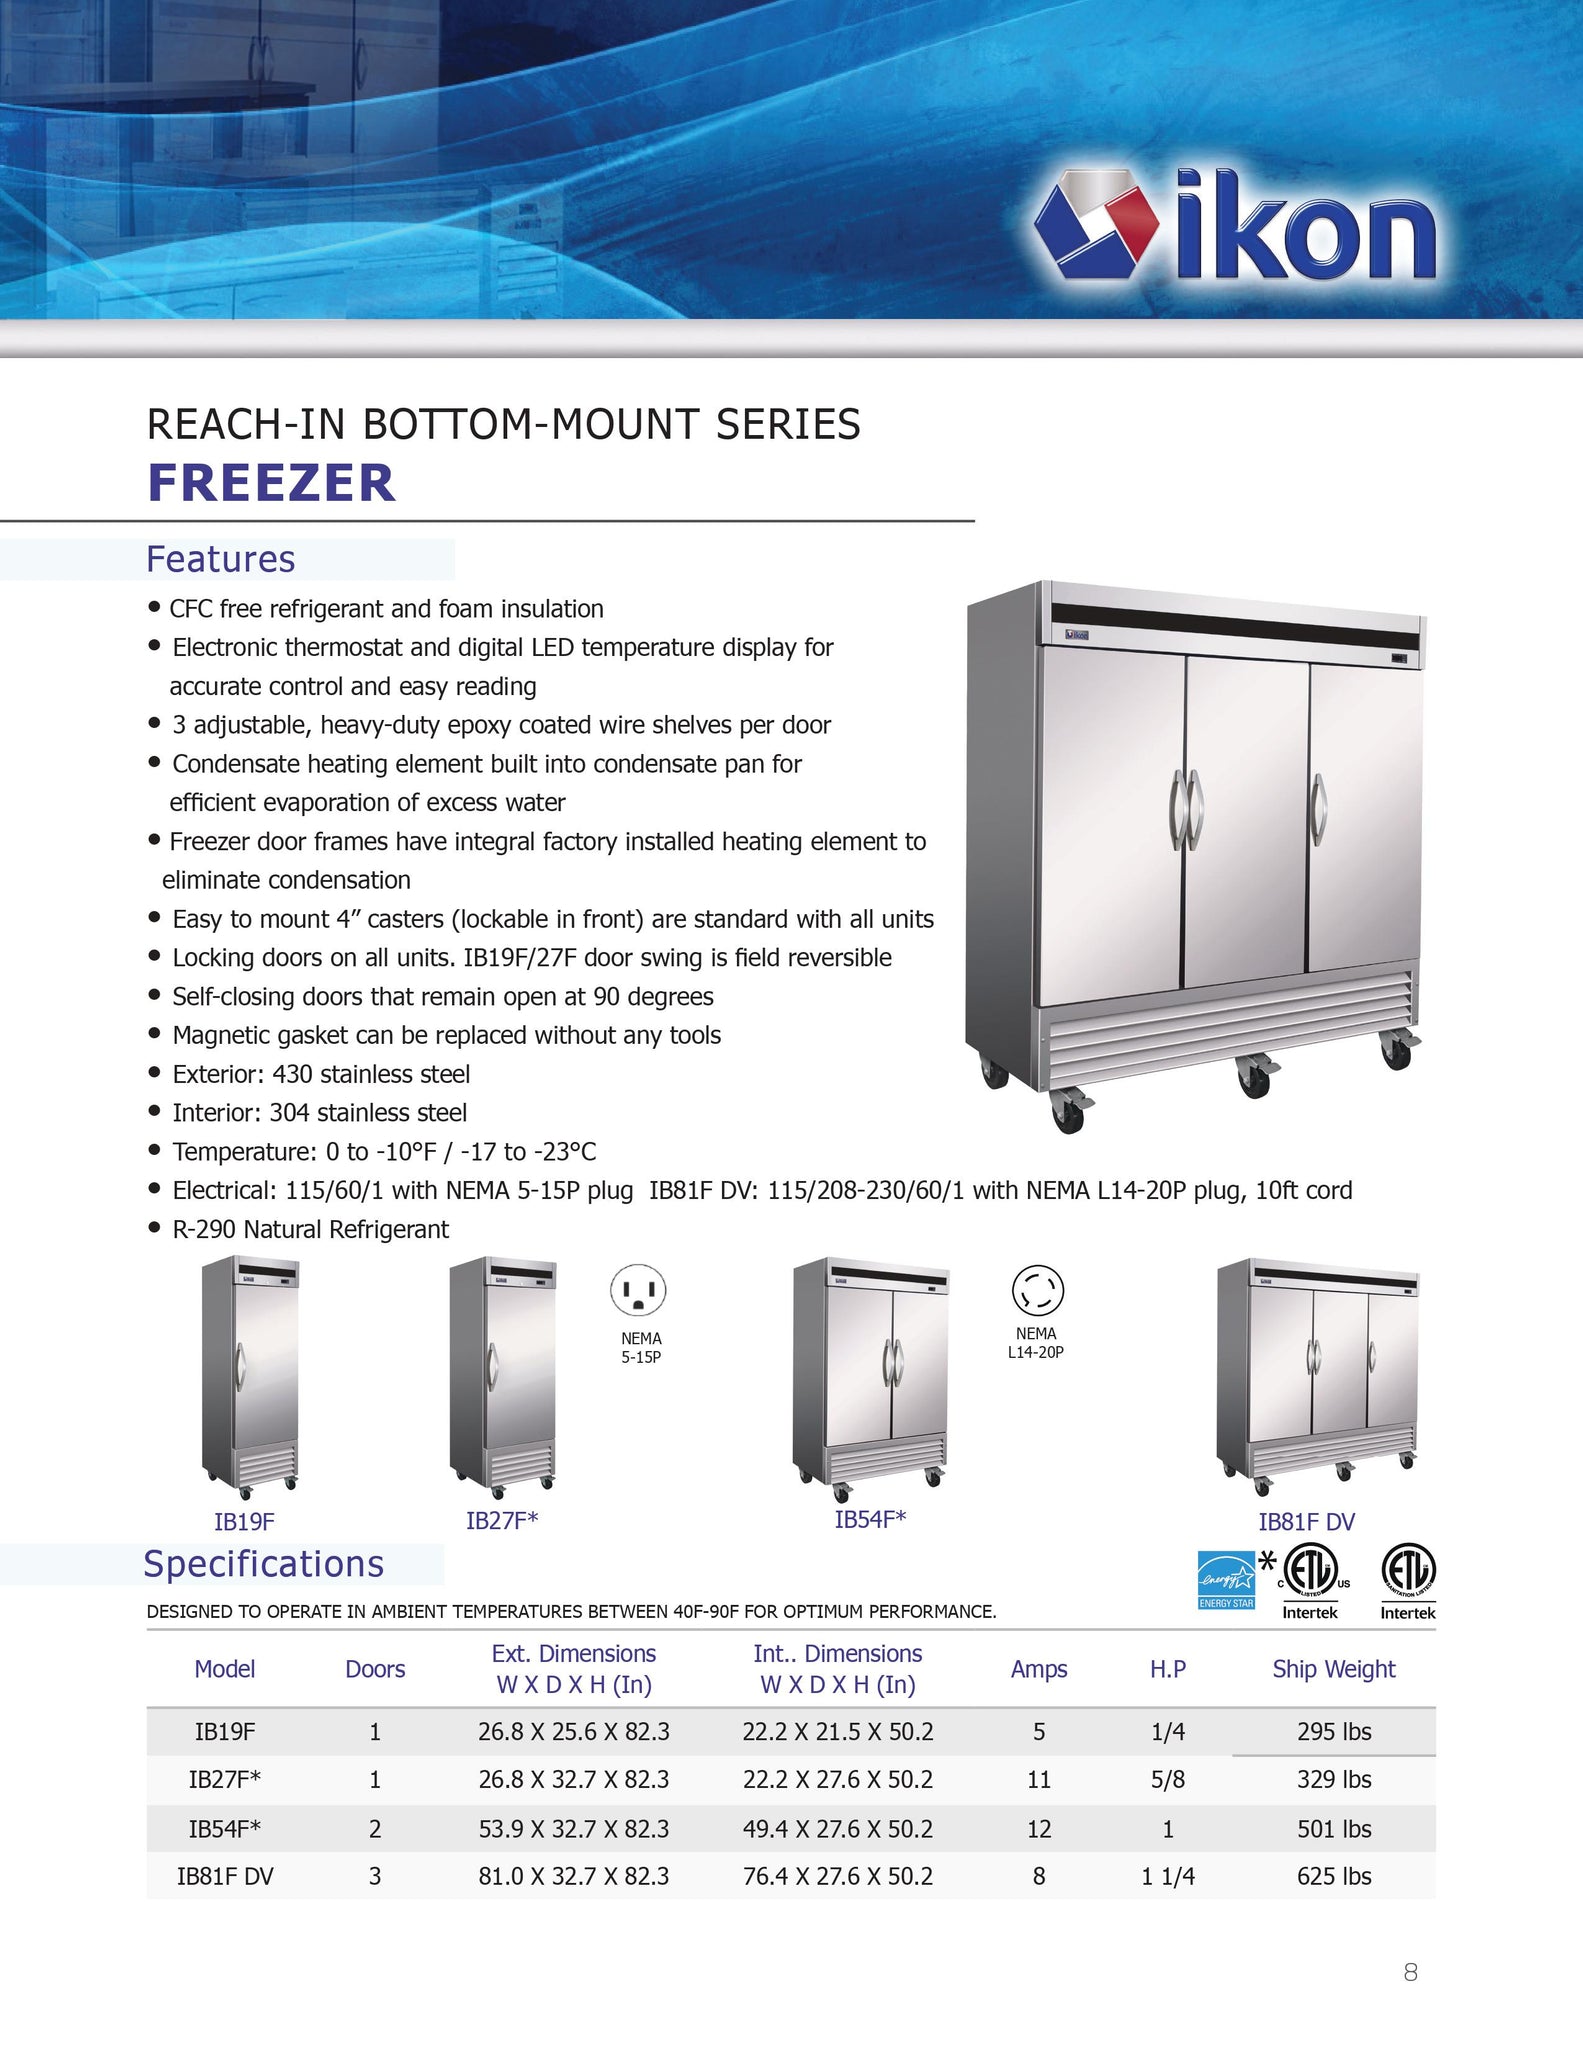 Ikon IB27F 27" One Section Solid Door Reach-In Freezer